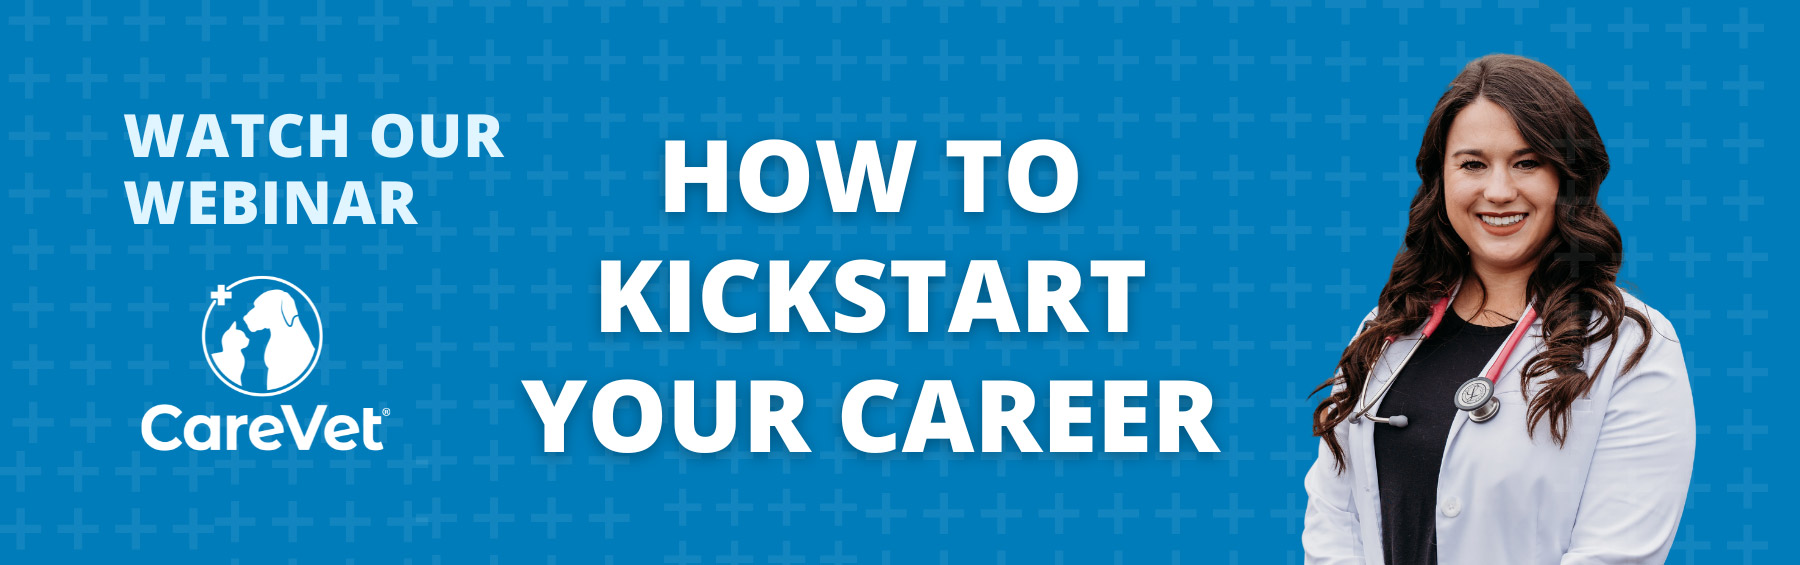 Watch Our Webinar: How to Kickstart Your Career